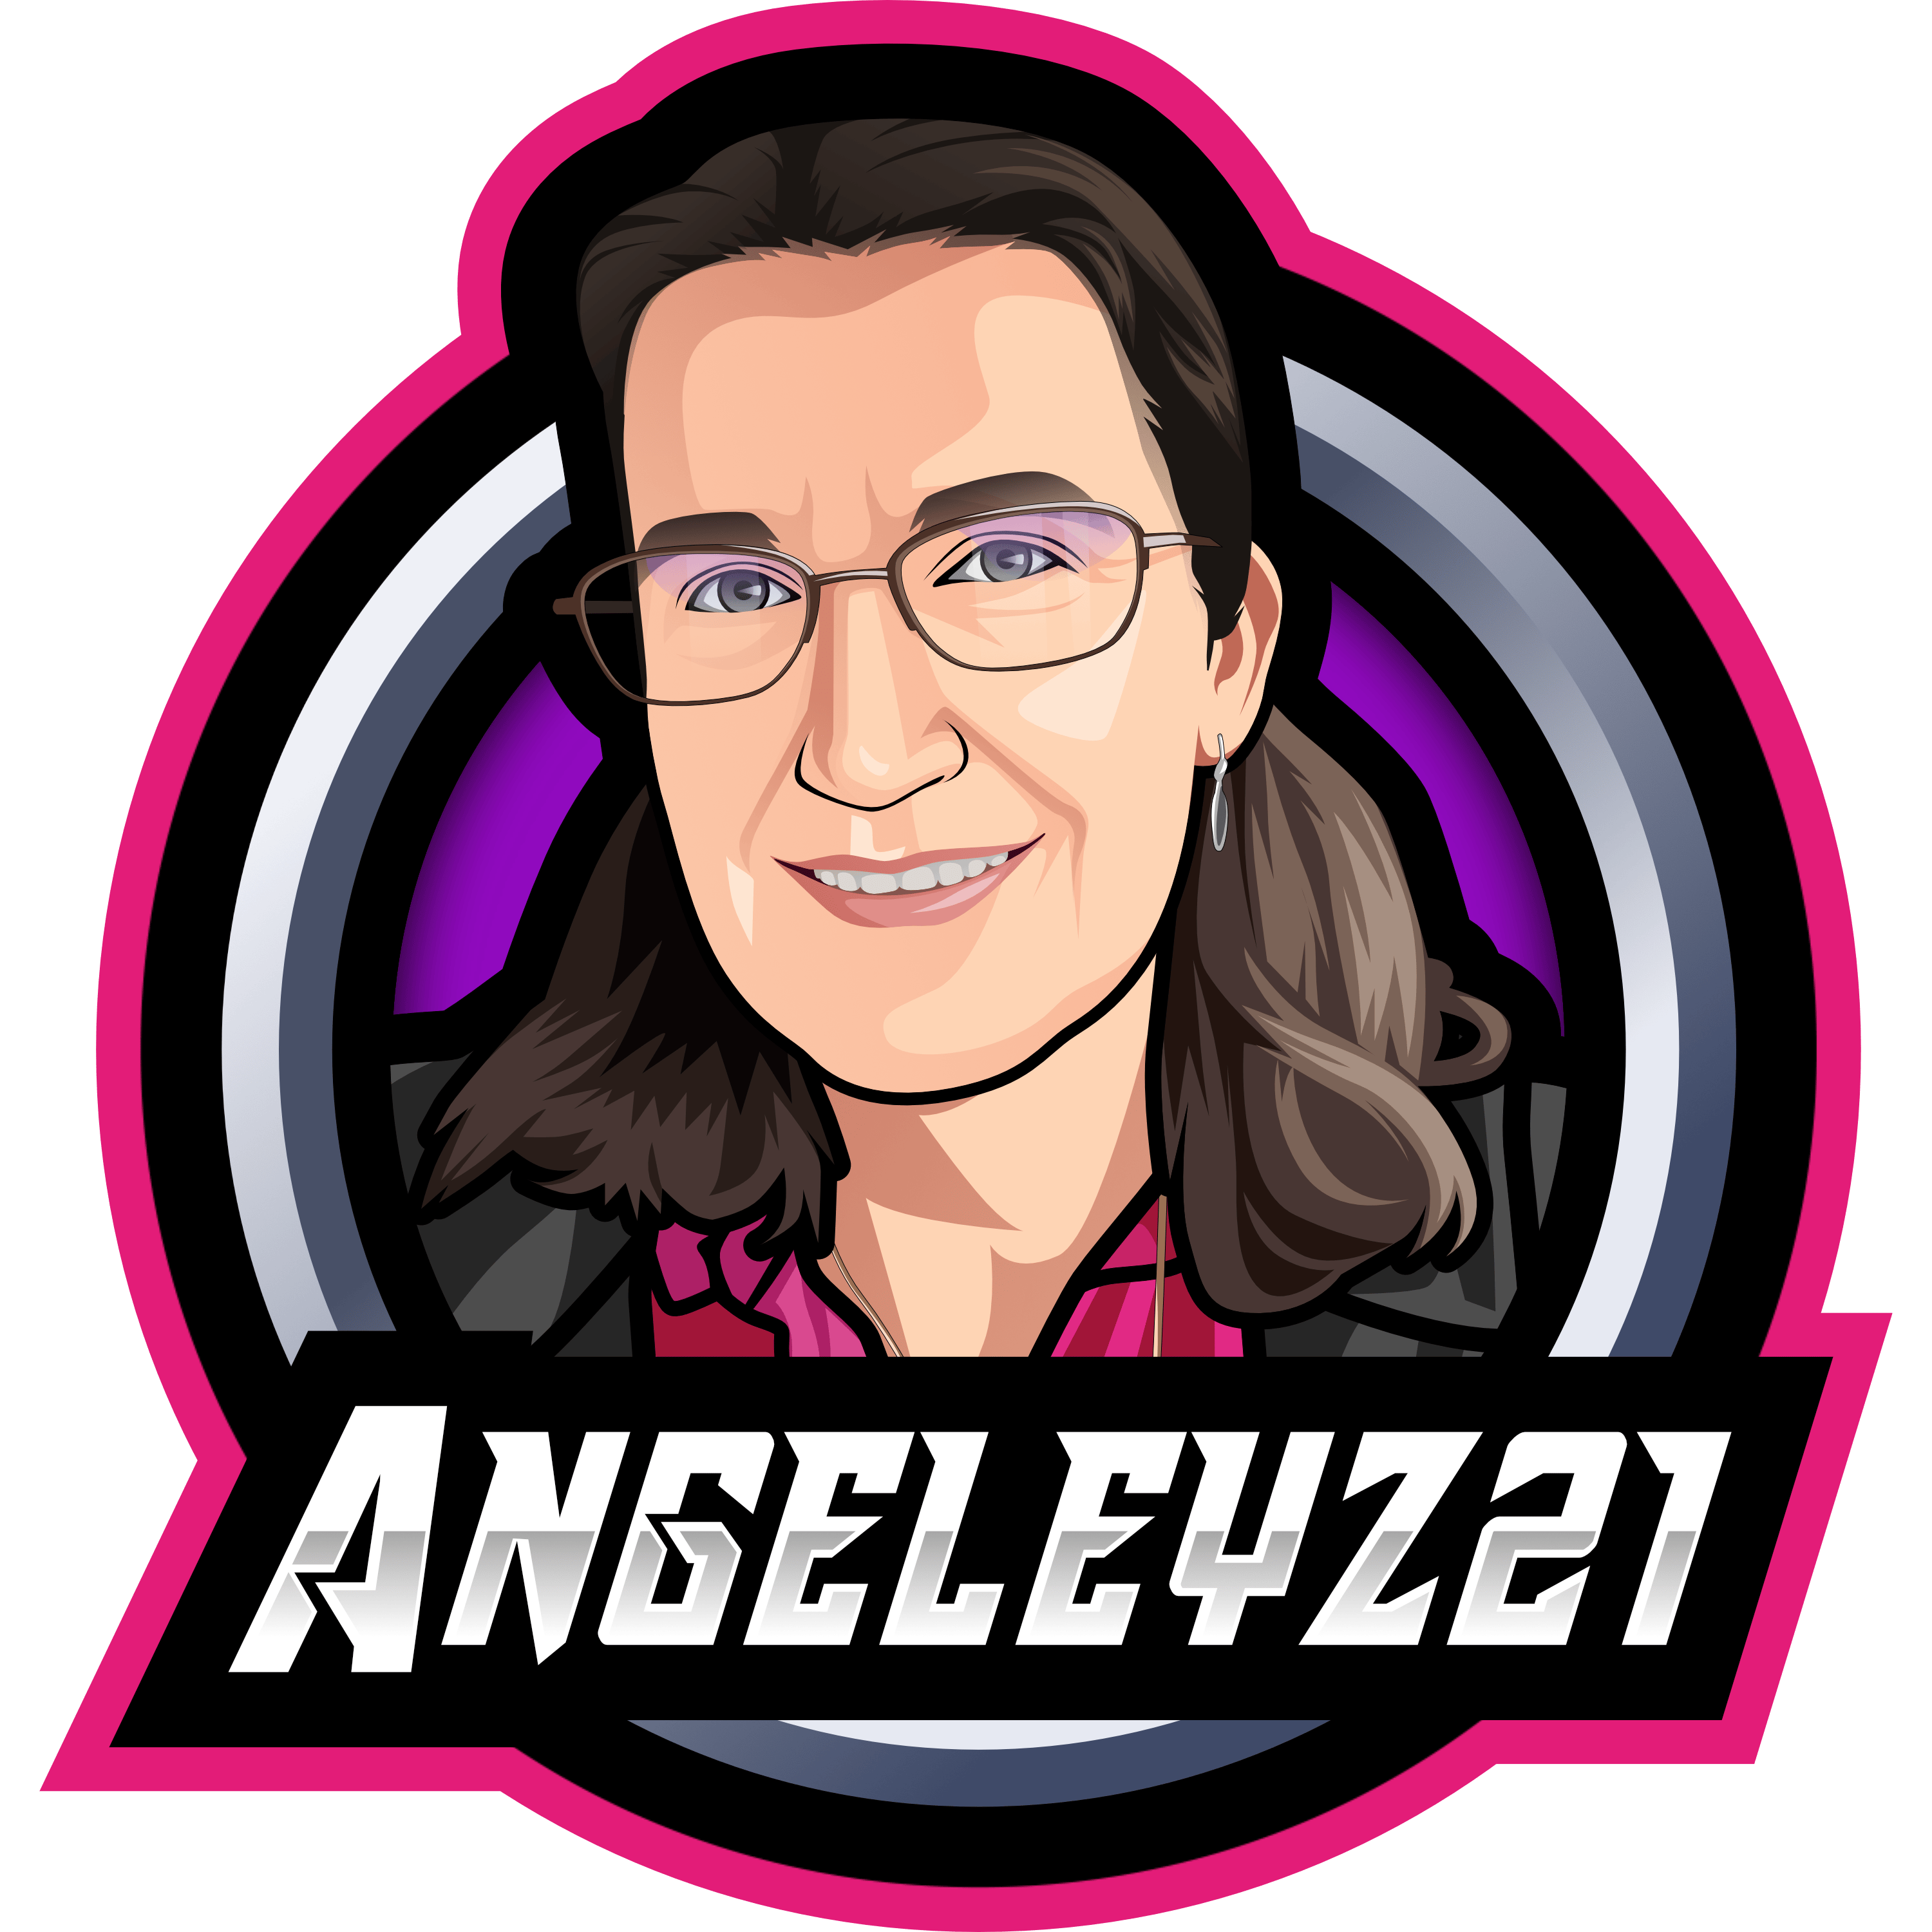 Angeleyz21 avatar